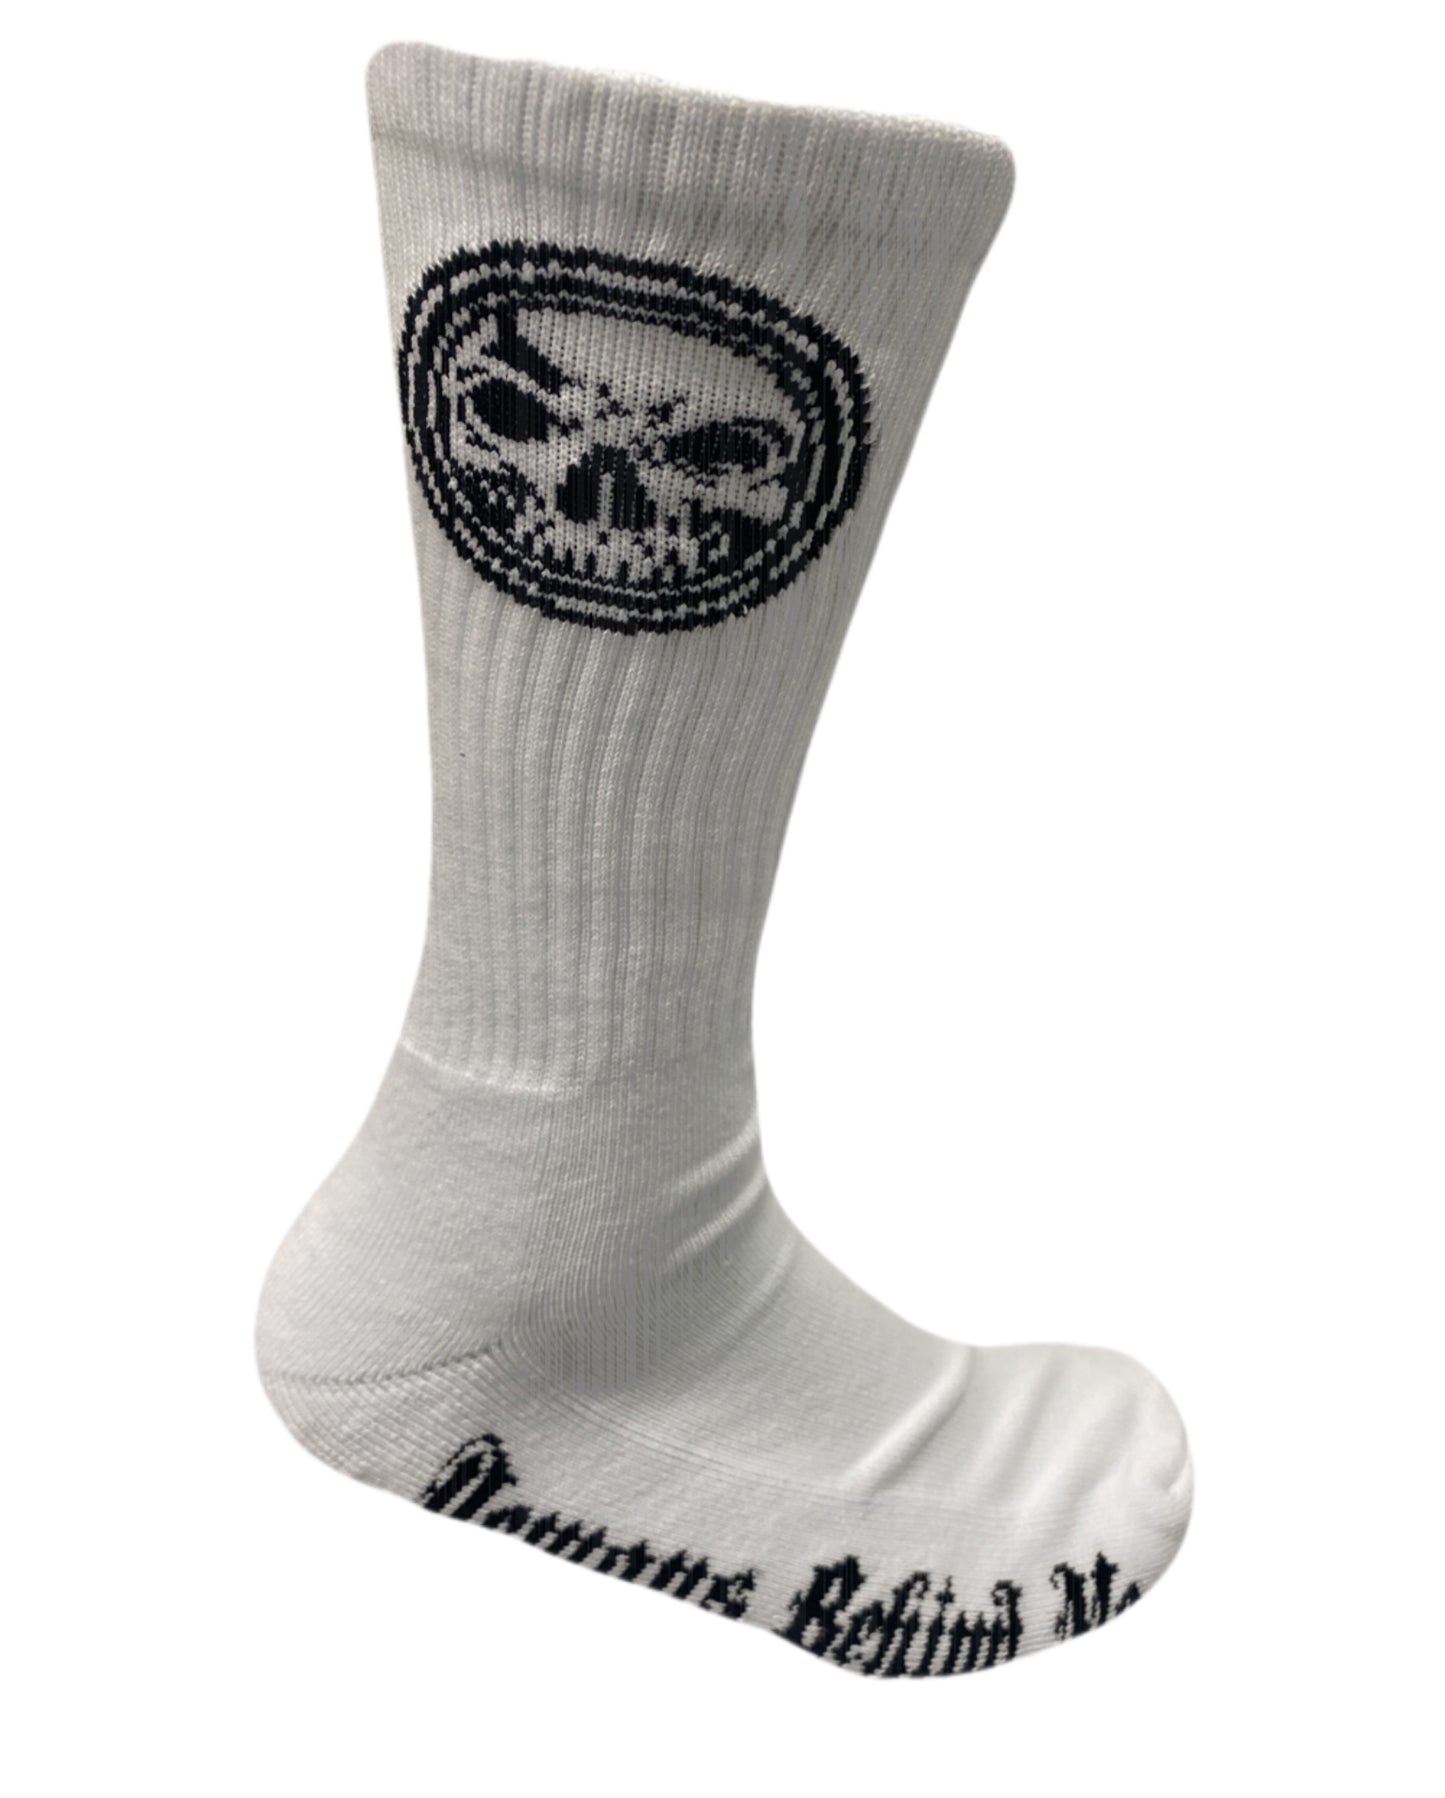 NEW!  High Performance Athletic Socks (Pair) - White